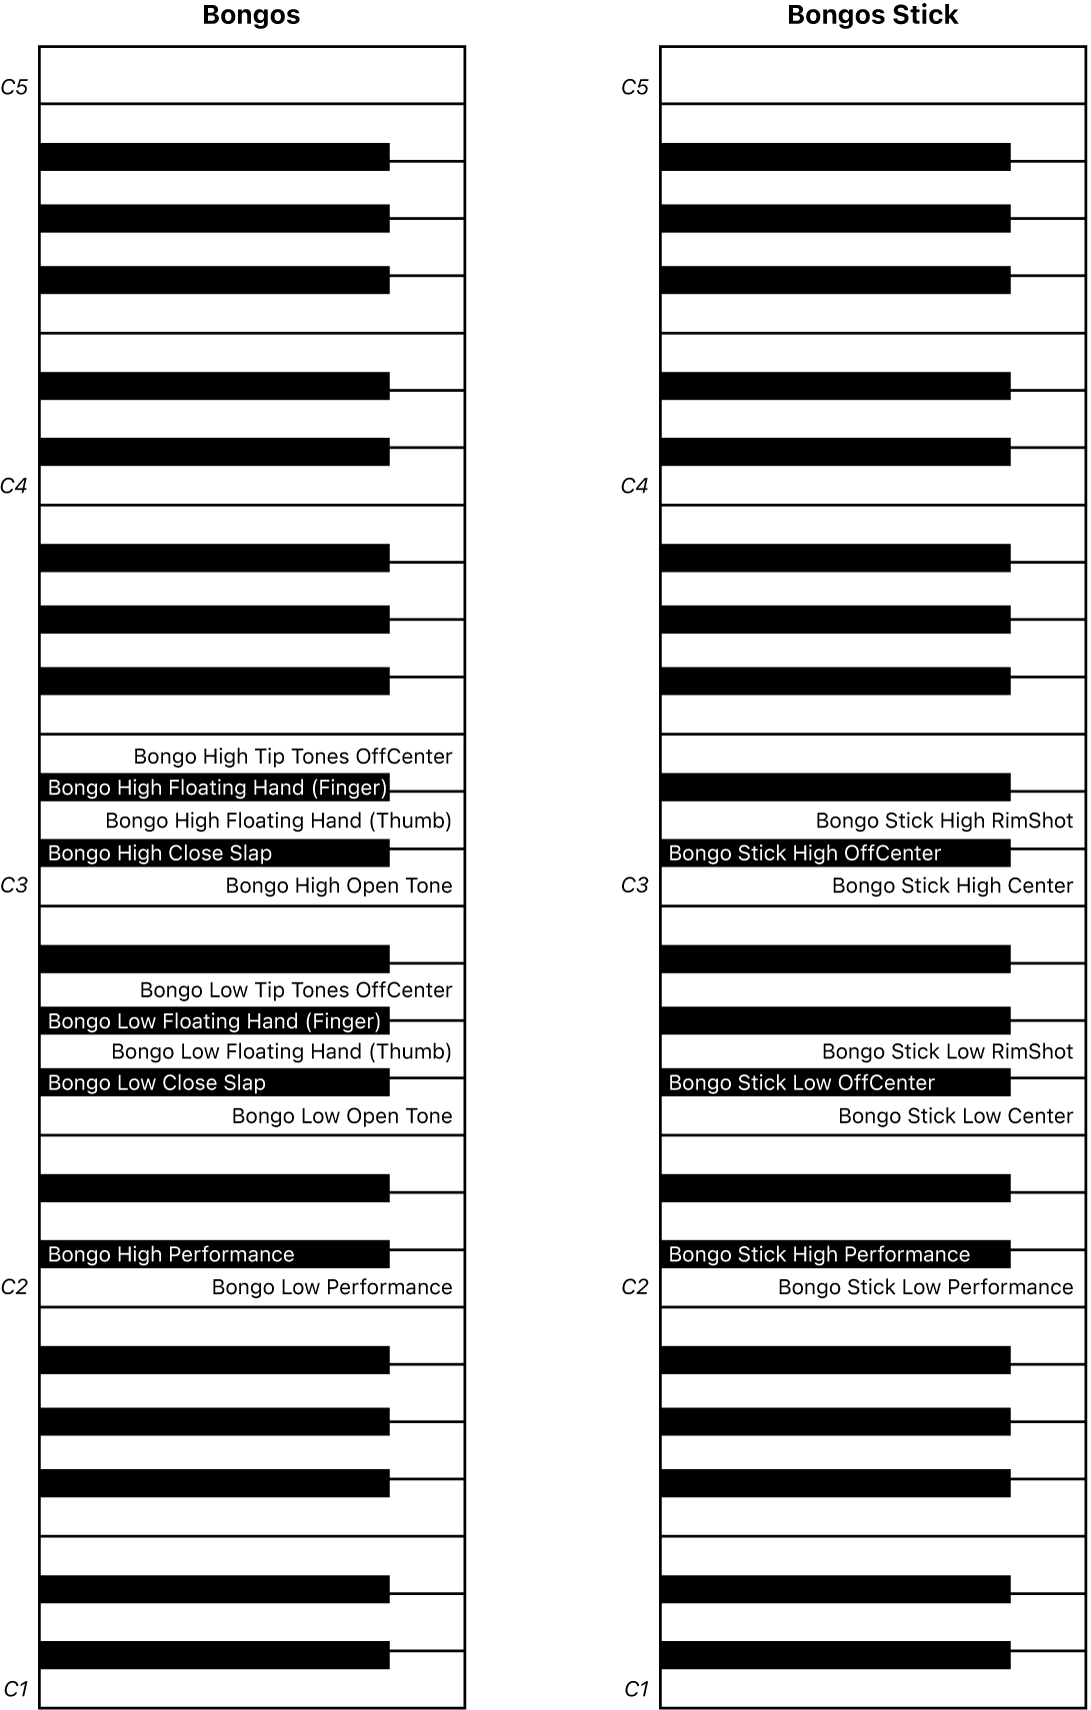 Abbildung. Keyboard-Mappings für Bongos- und Bongos Stick-Performance